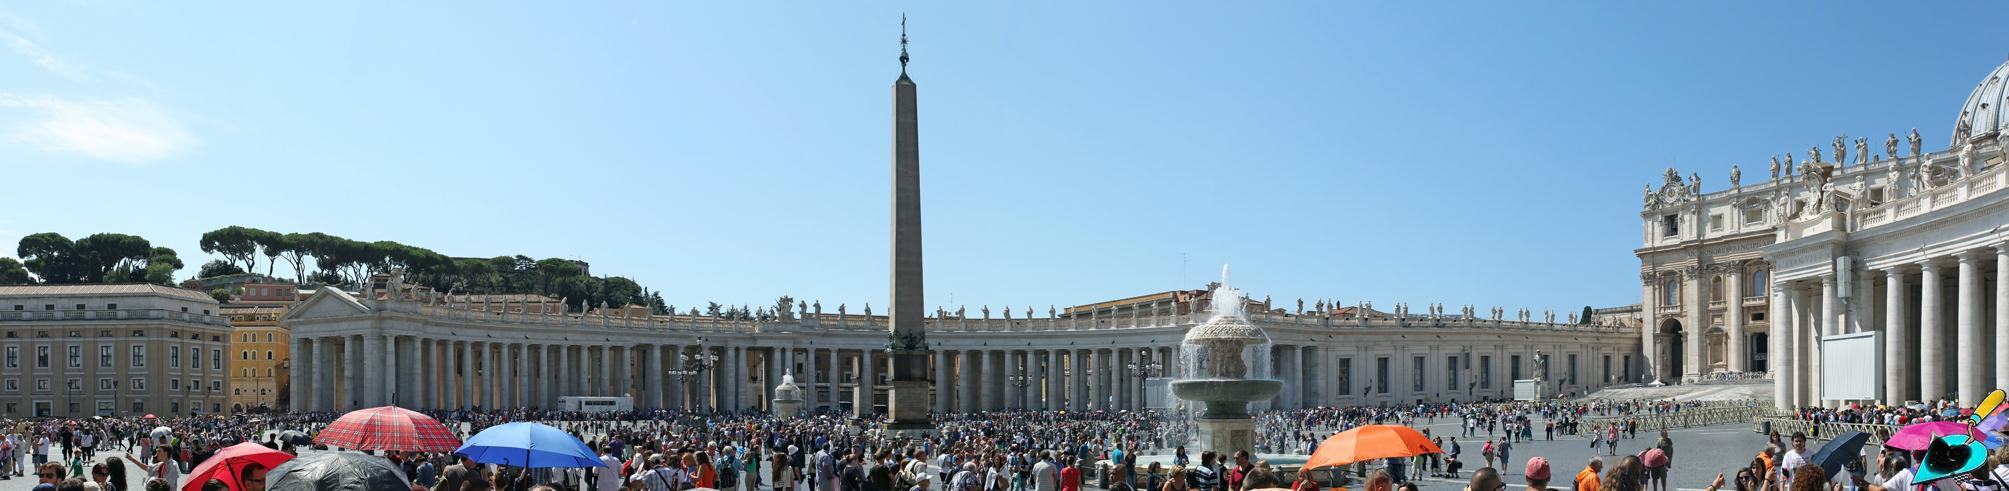 Ватикан, Piazza San Pietro. Ватикан — Панорамы